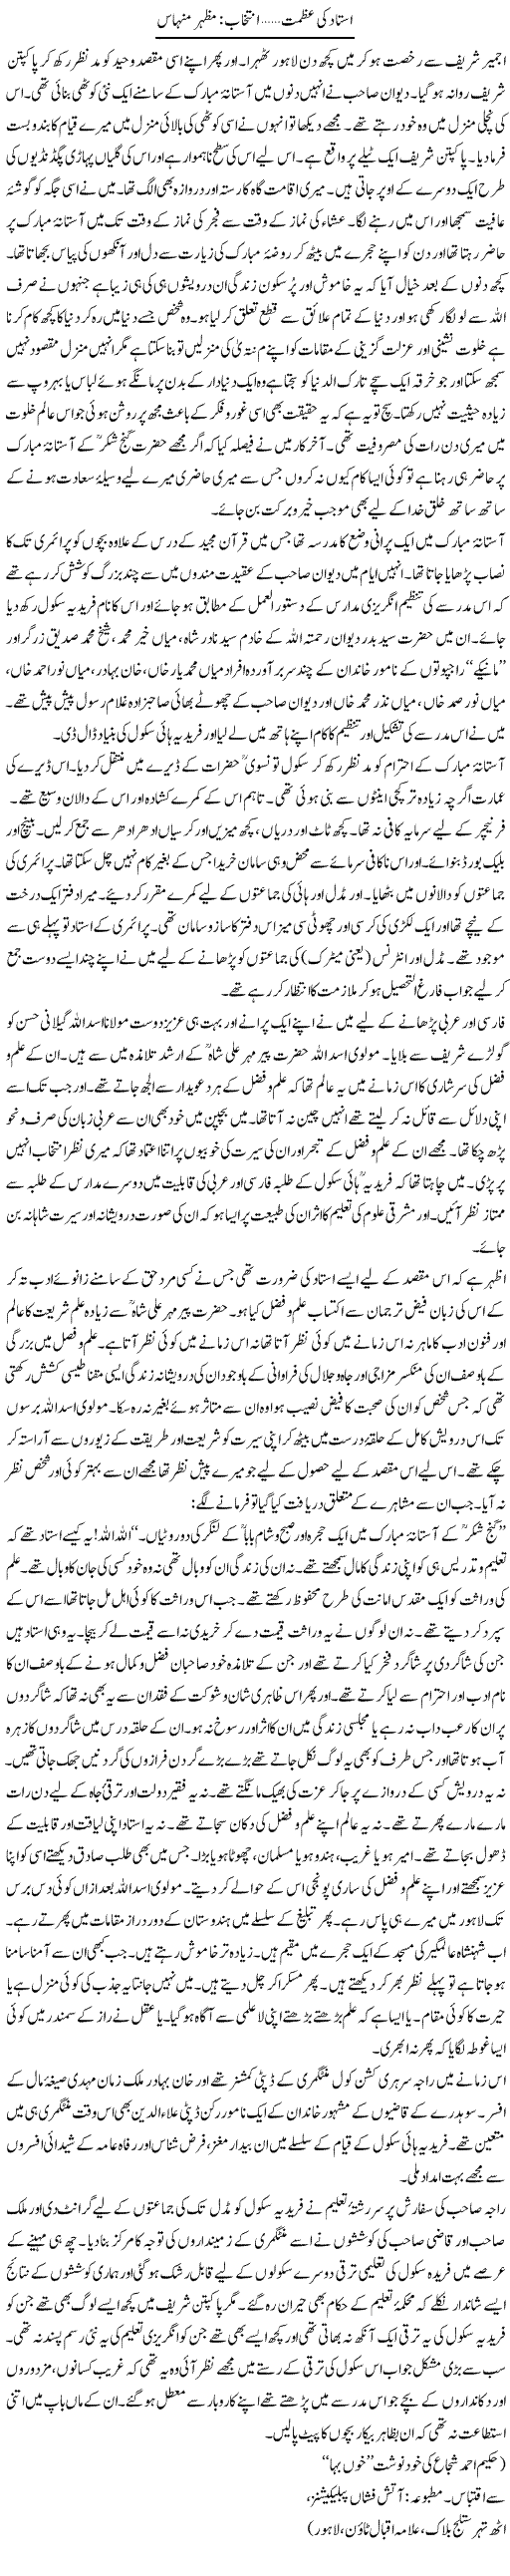 Ustad Ki Azmat | Mazhar Minhas | Daily Urdu Columns